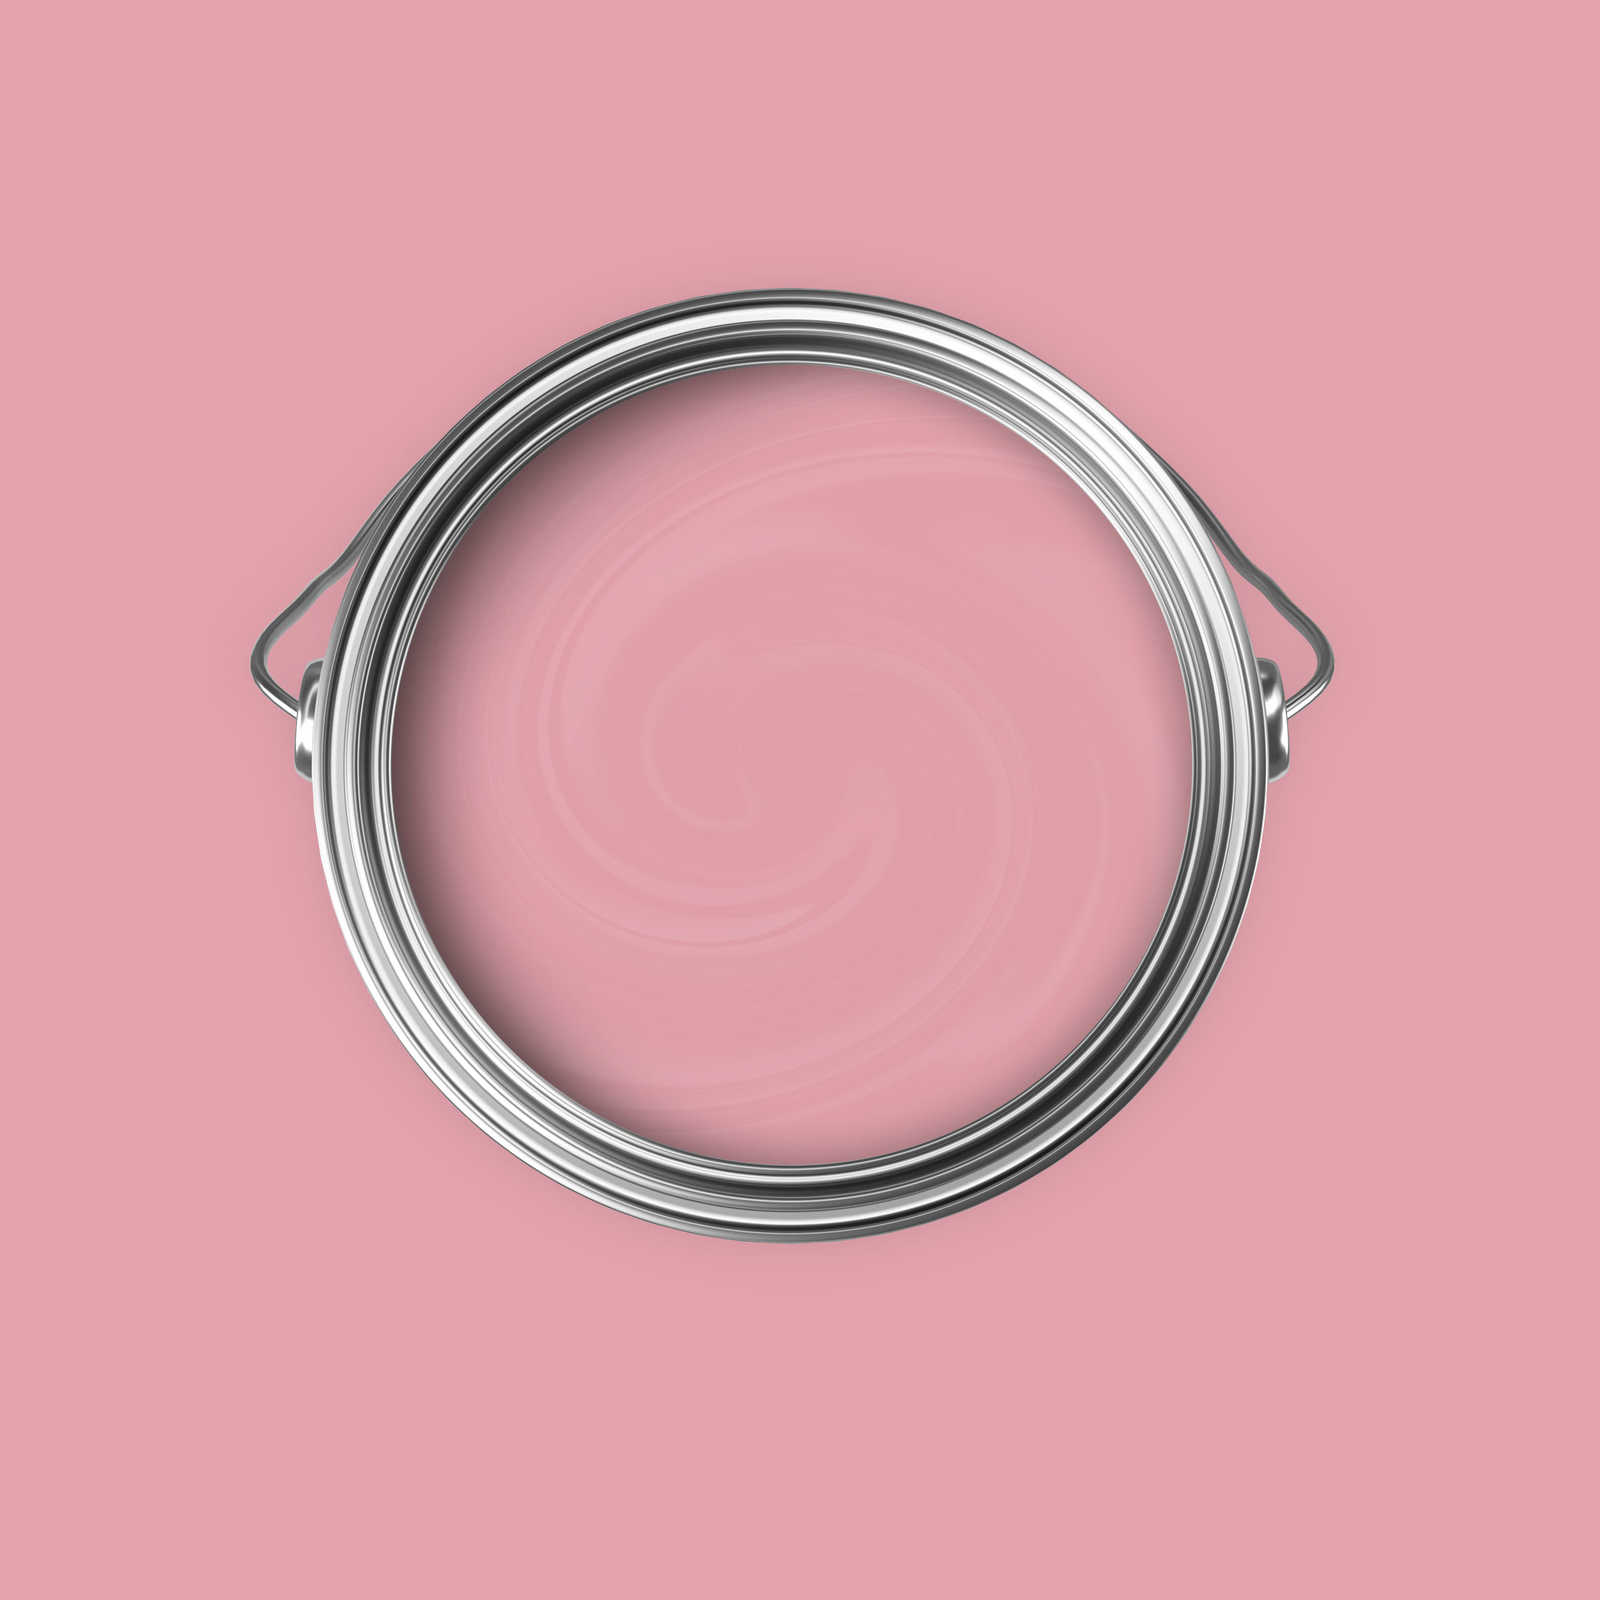             Pintura mural Premium alegre rosa bebé »Blooming Blossom« NW1017 – 5 litro
        